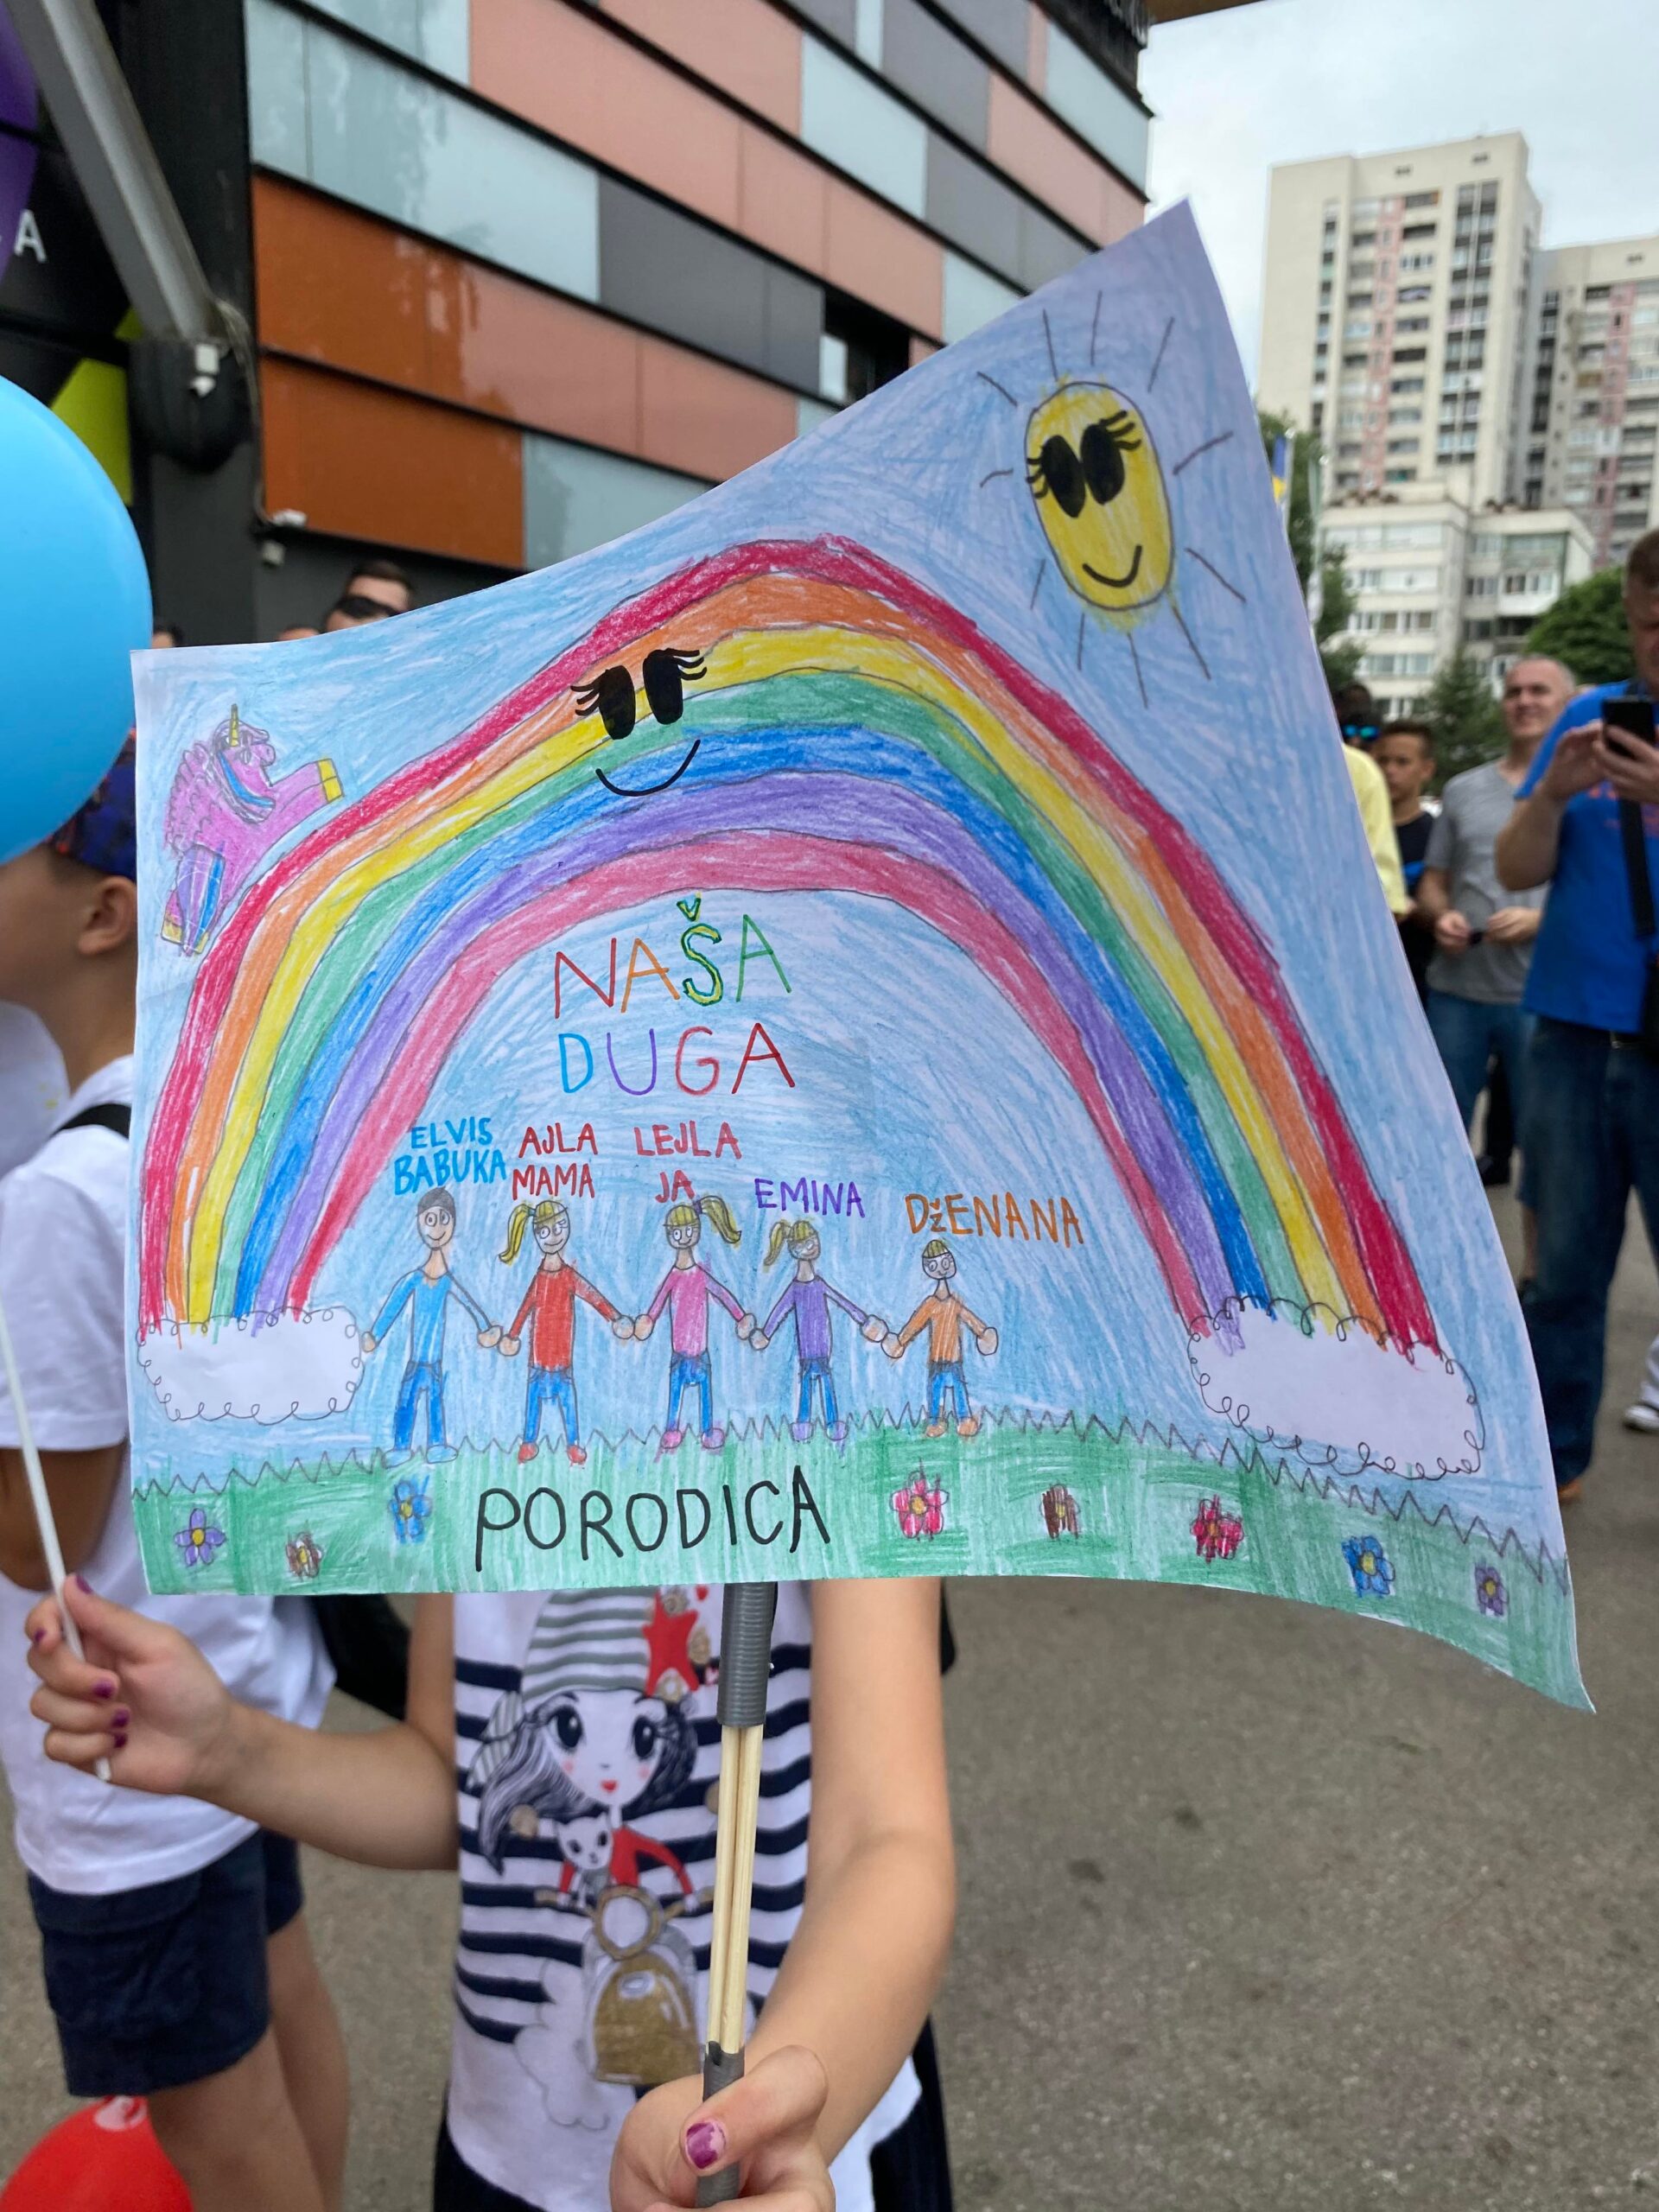 (VIDEO) Protesti protiv gej parade #Vratite nam dugu: Izjava djevojčice postala viralanaratite nam dugu, Sanin Musa, LGBT, protesti